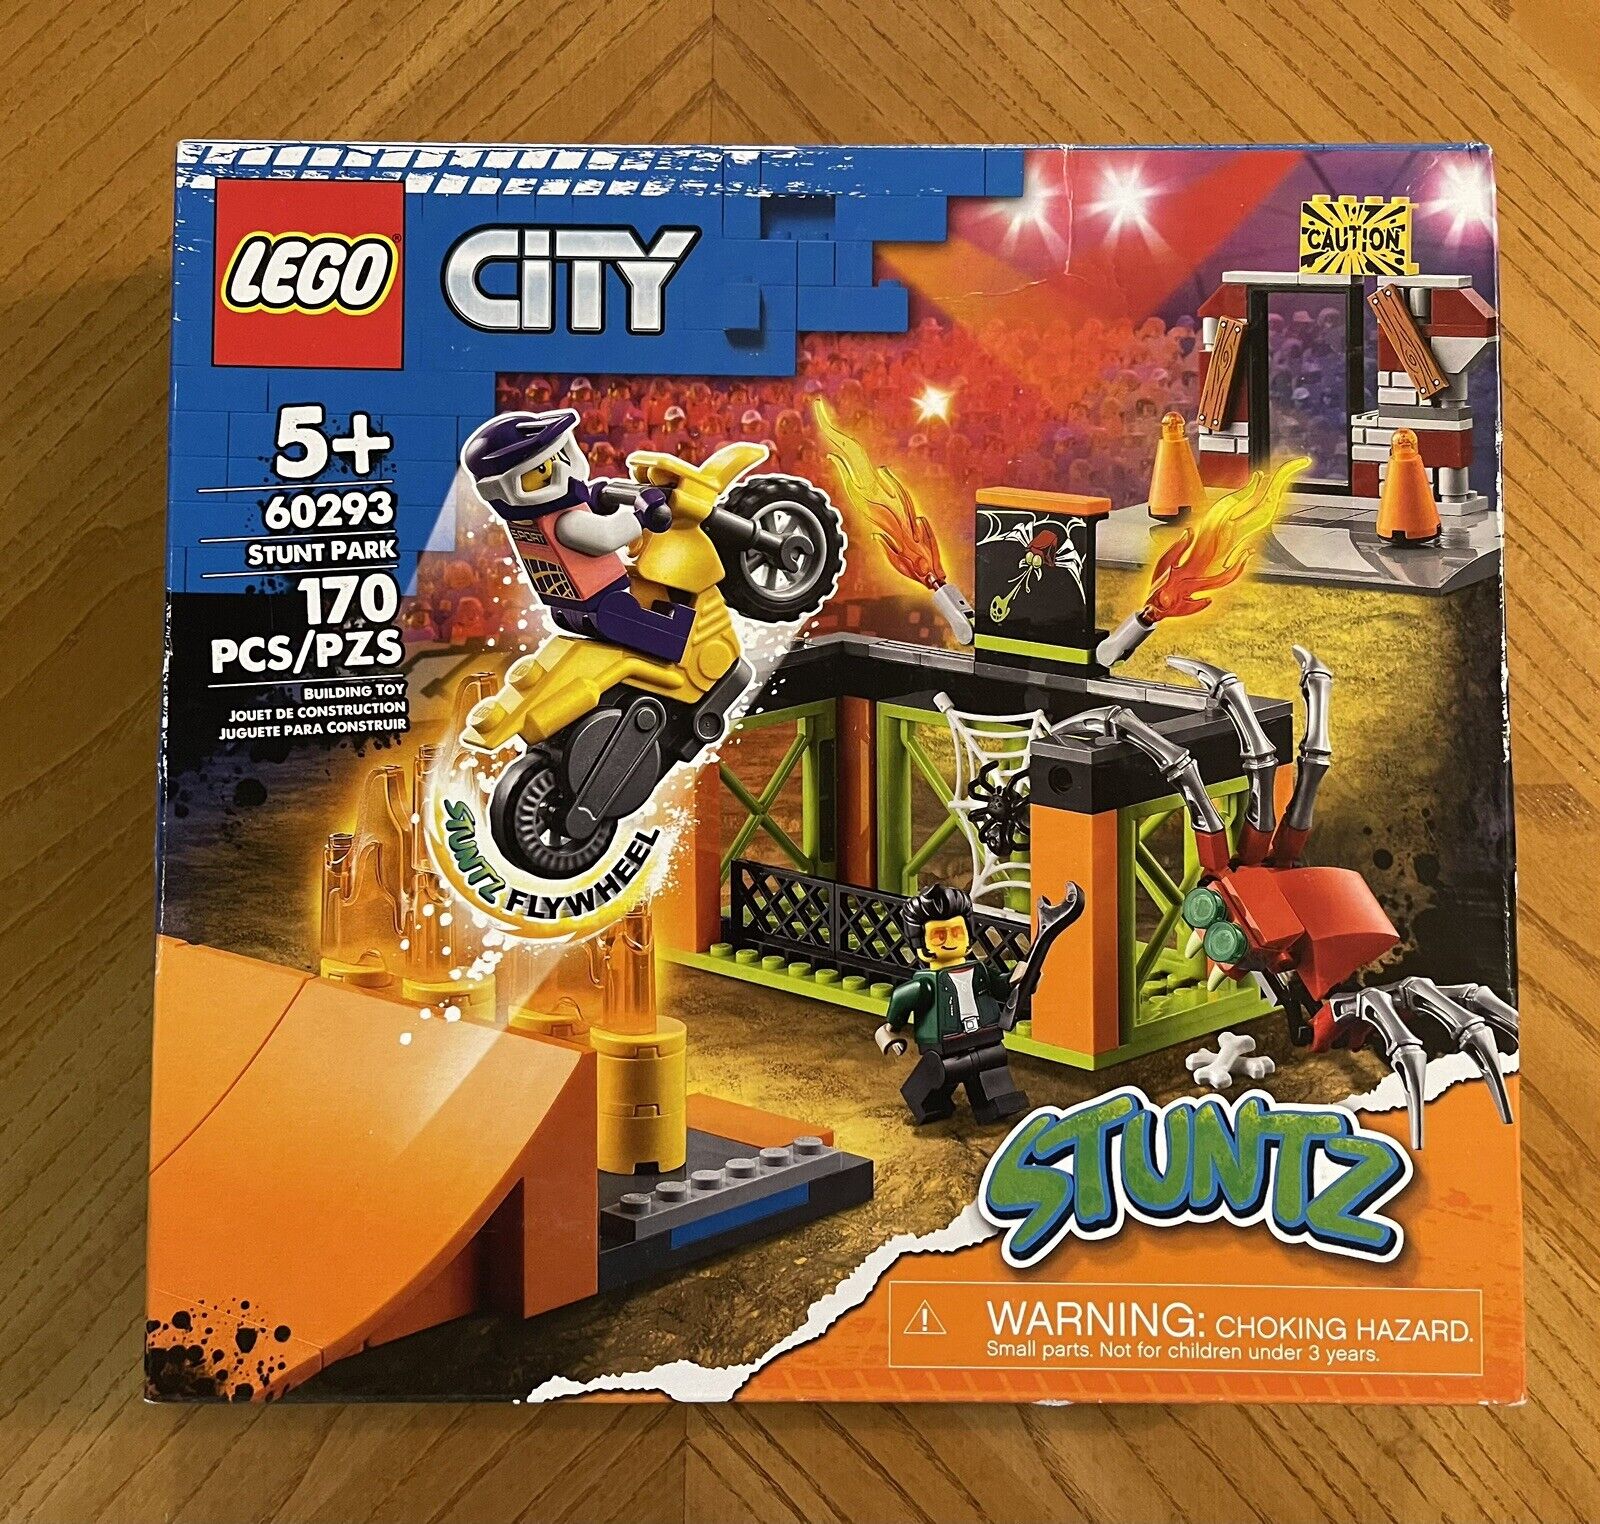 LEGO City Stuntz Stunt Park 60293 Multicolor 170 Pcs Motorcycle Building Toy TI